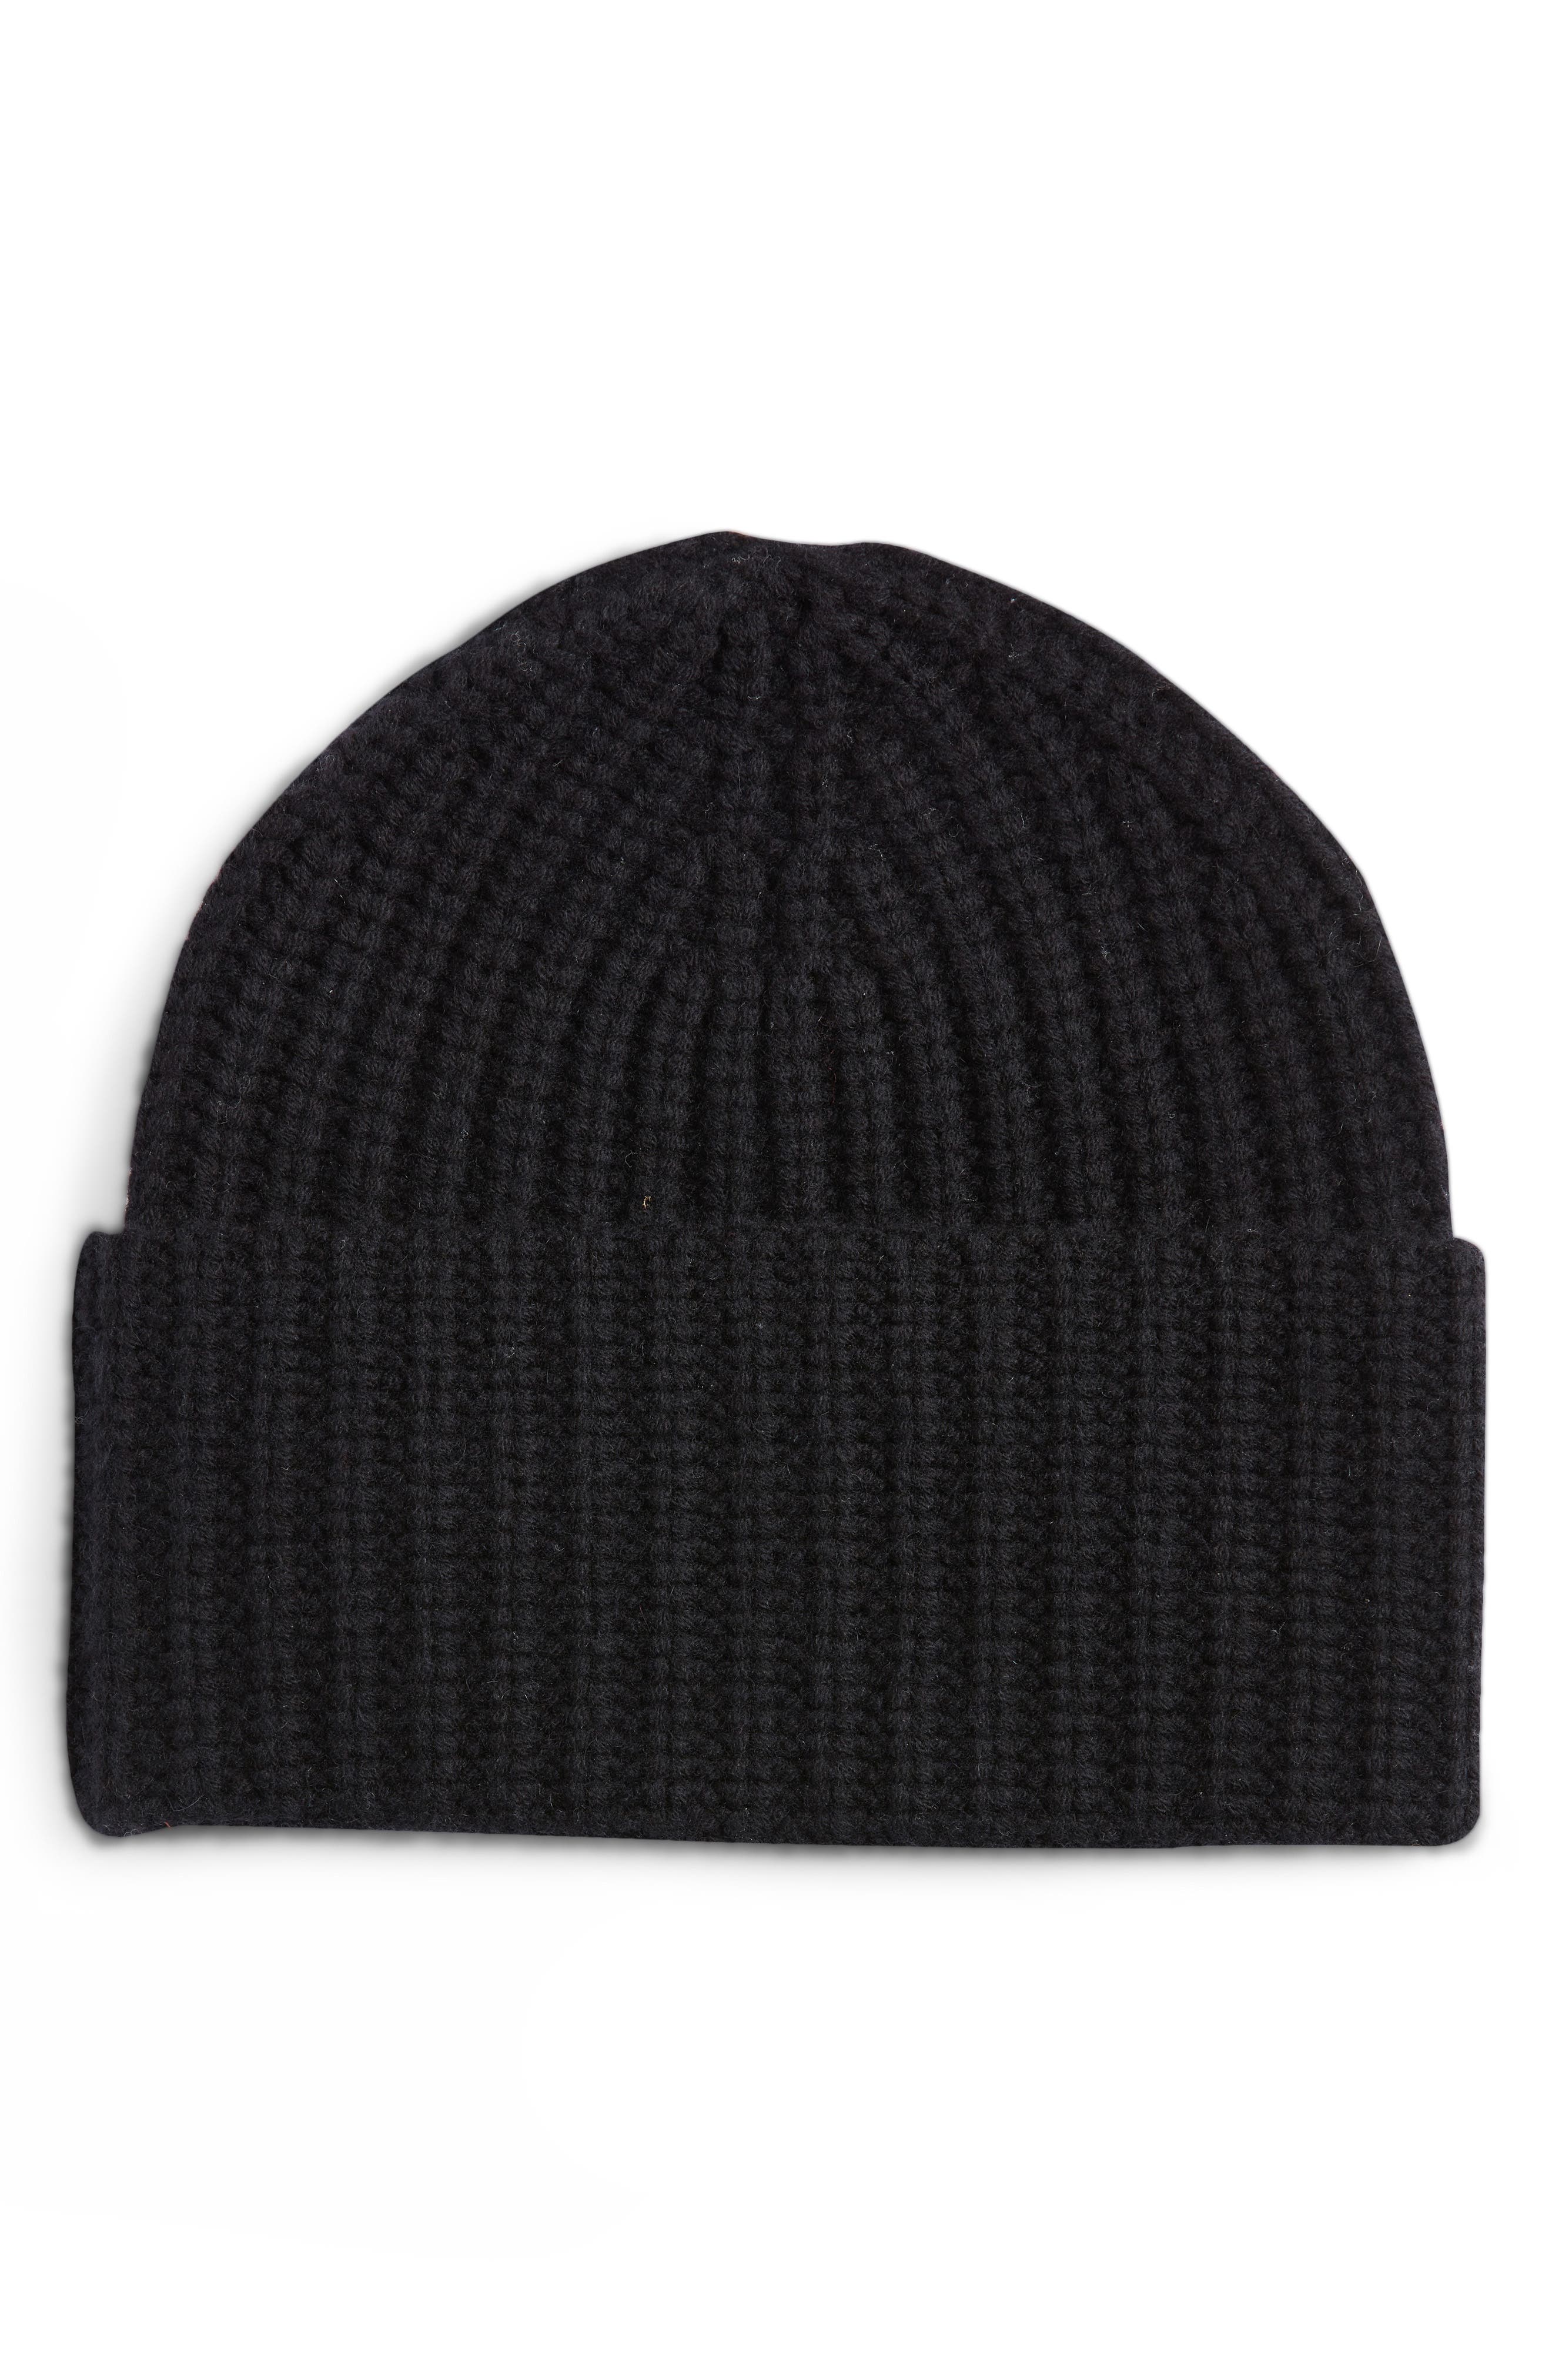 Mens and Womens Skullies Beanies Cougar Pride Classic Toboggan Hat Sports & Outdoors Warm Hat Black